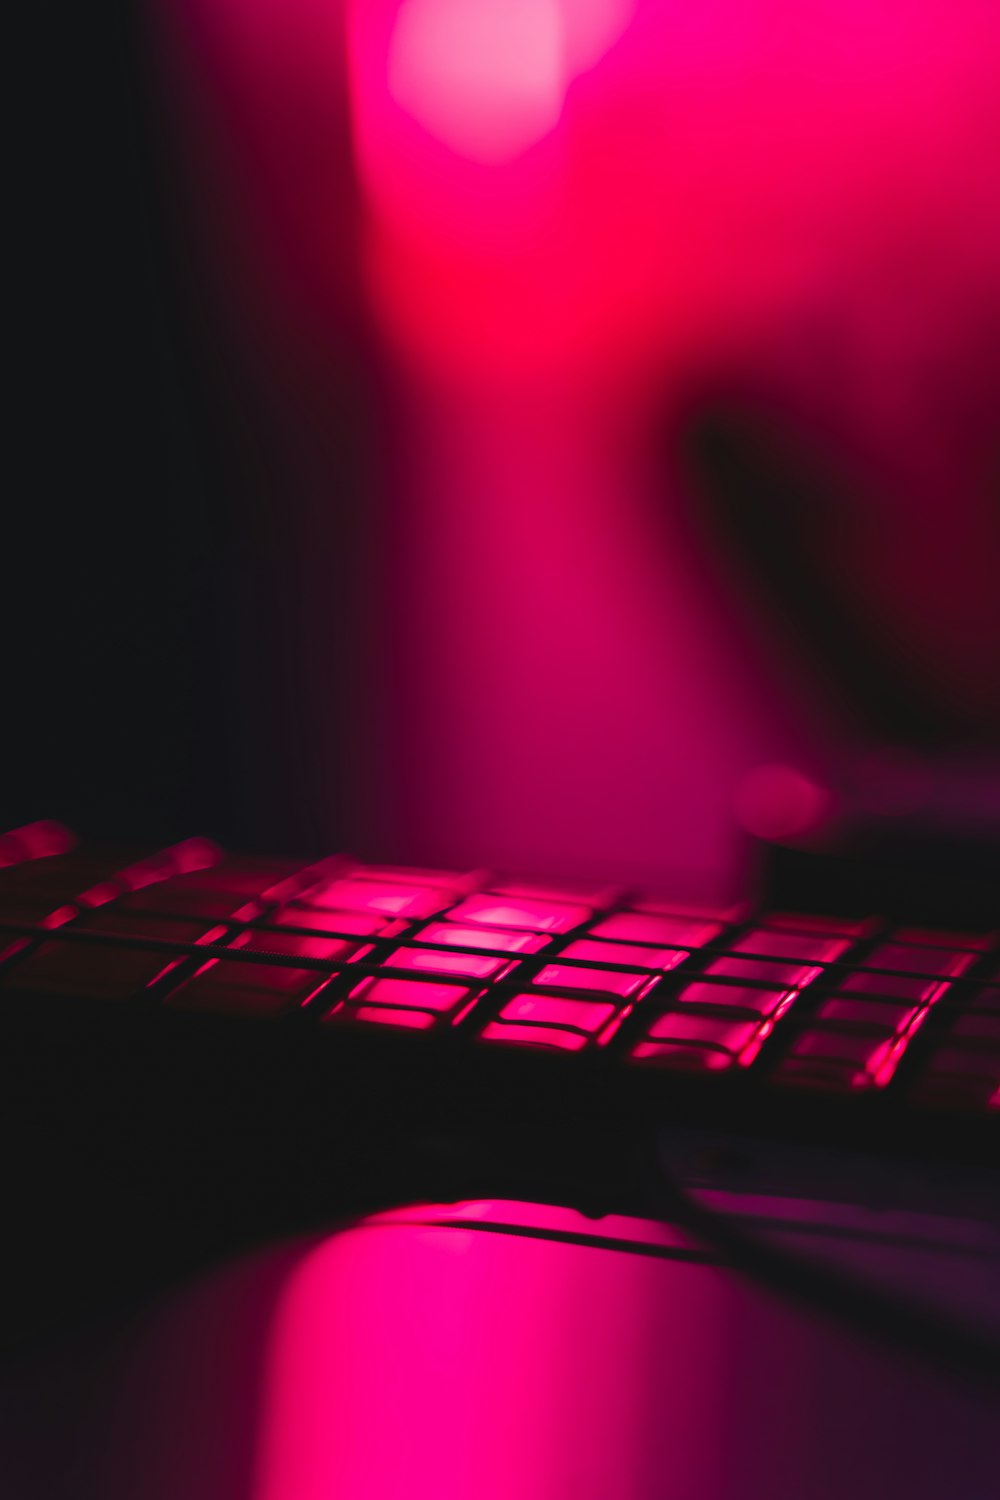 black computer keyboard on pink textile